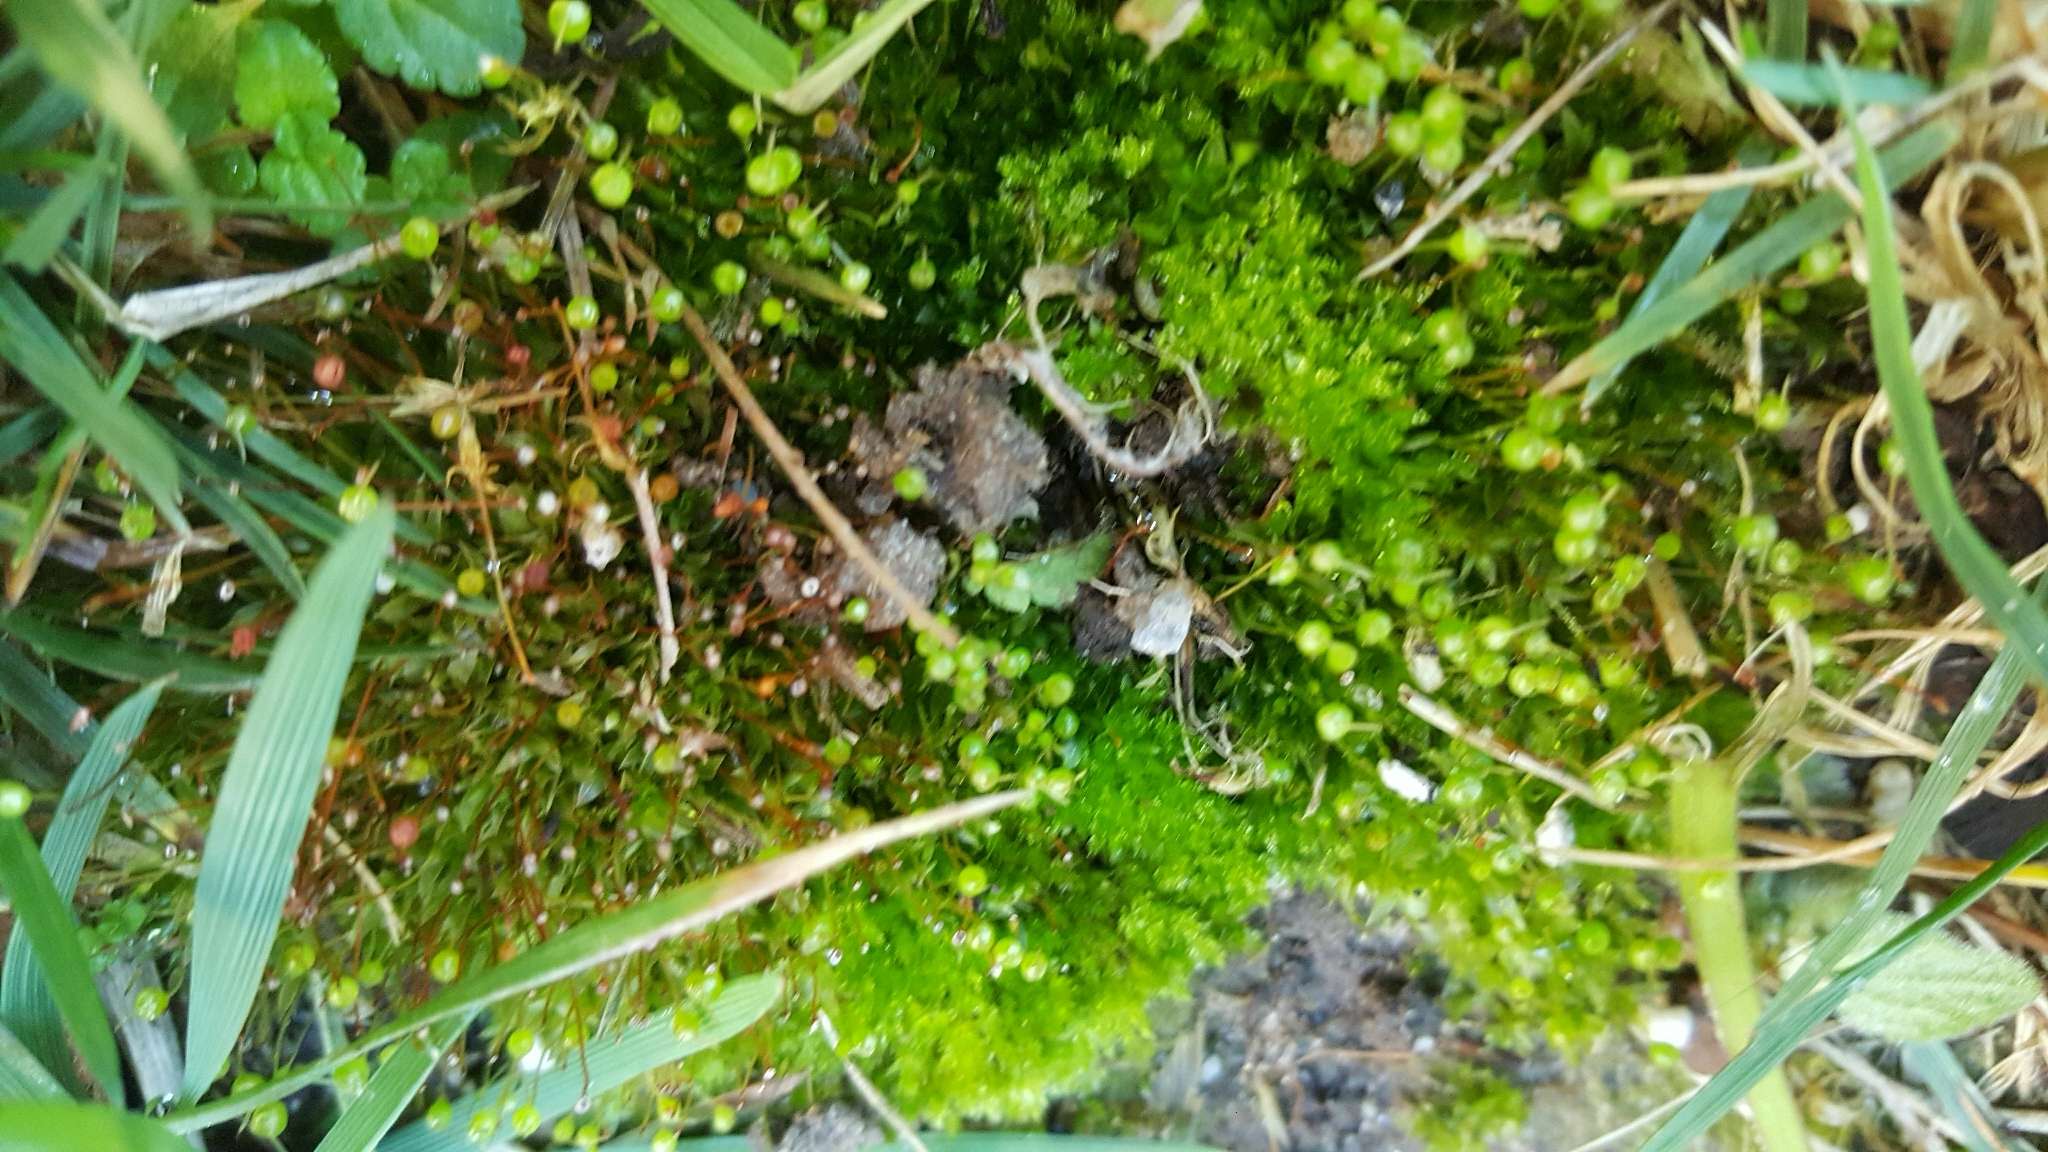 Image of physcomitrium moss